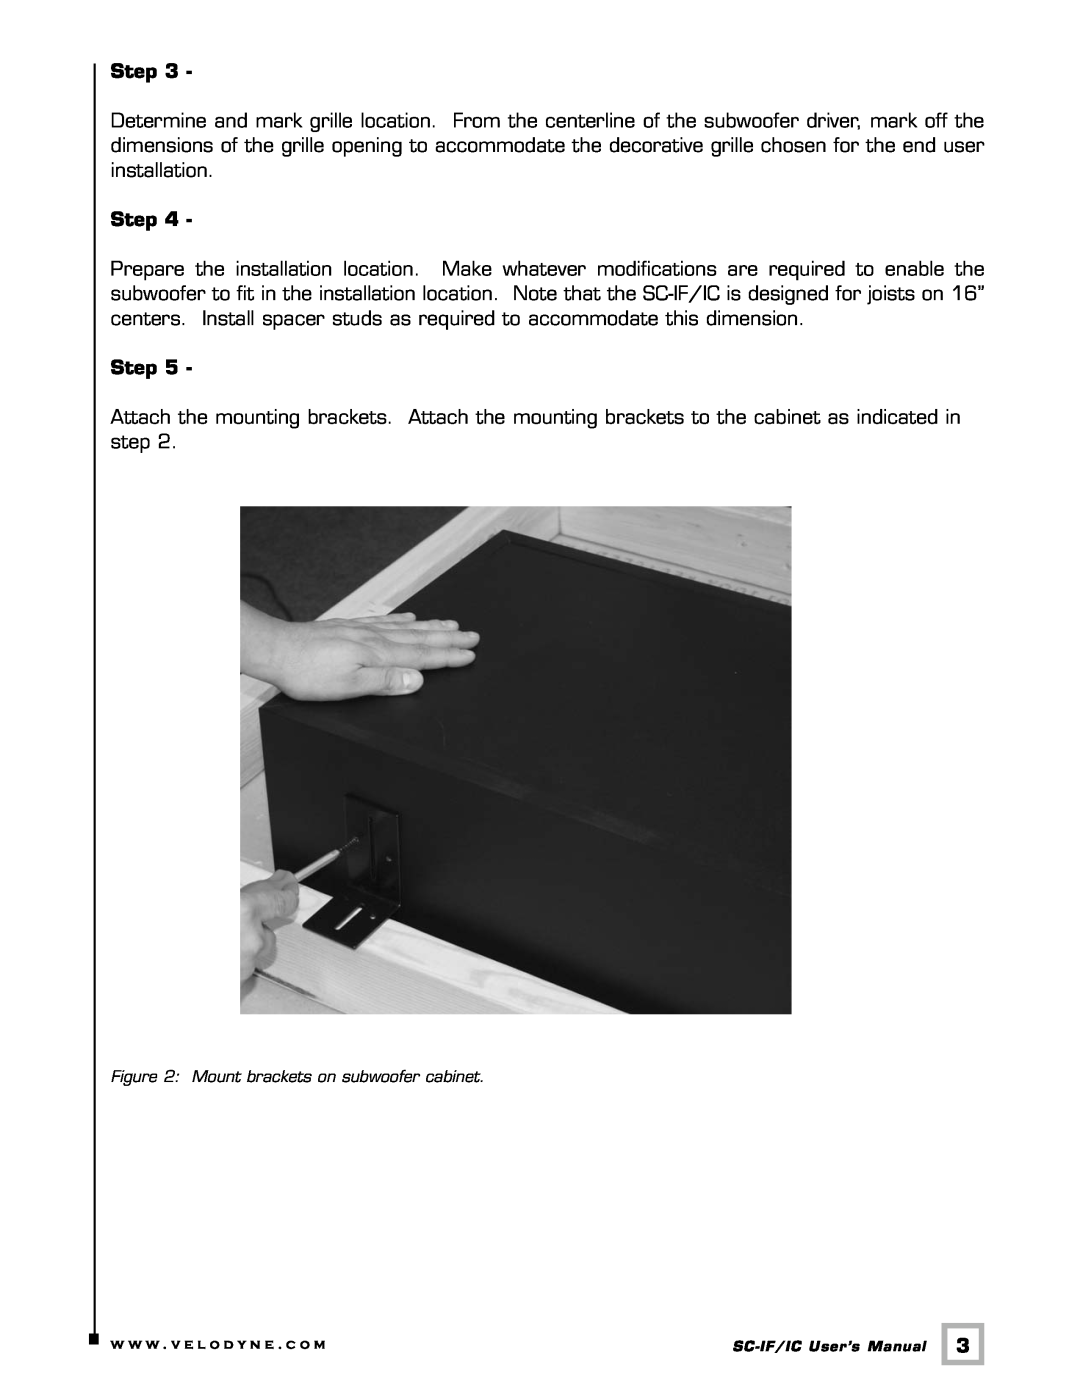 Velodyne Acoustics SC-IF/IC installation manual Step, Mount brackets on subwoofer cabinet 